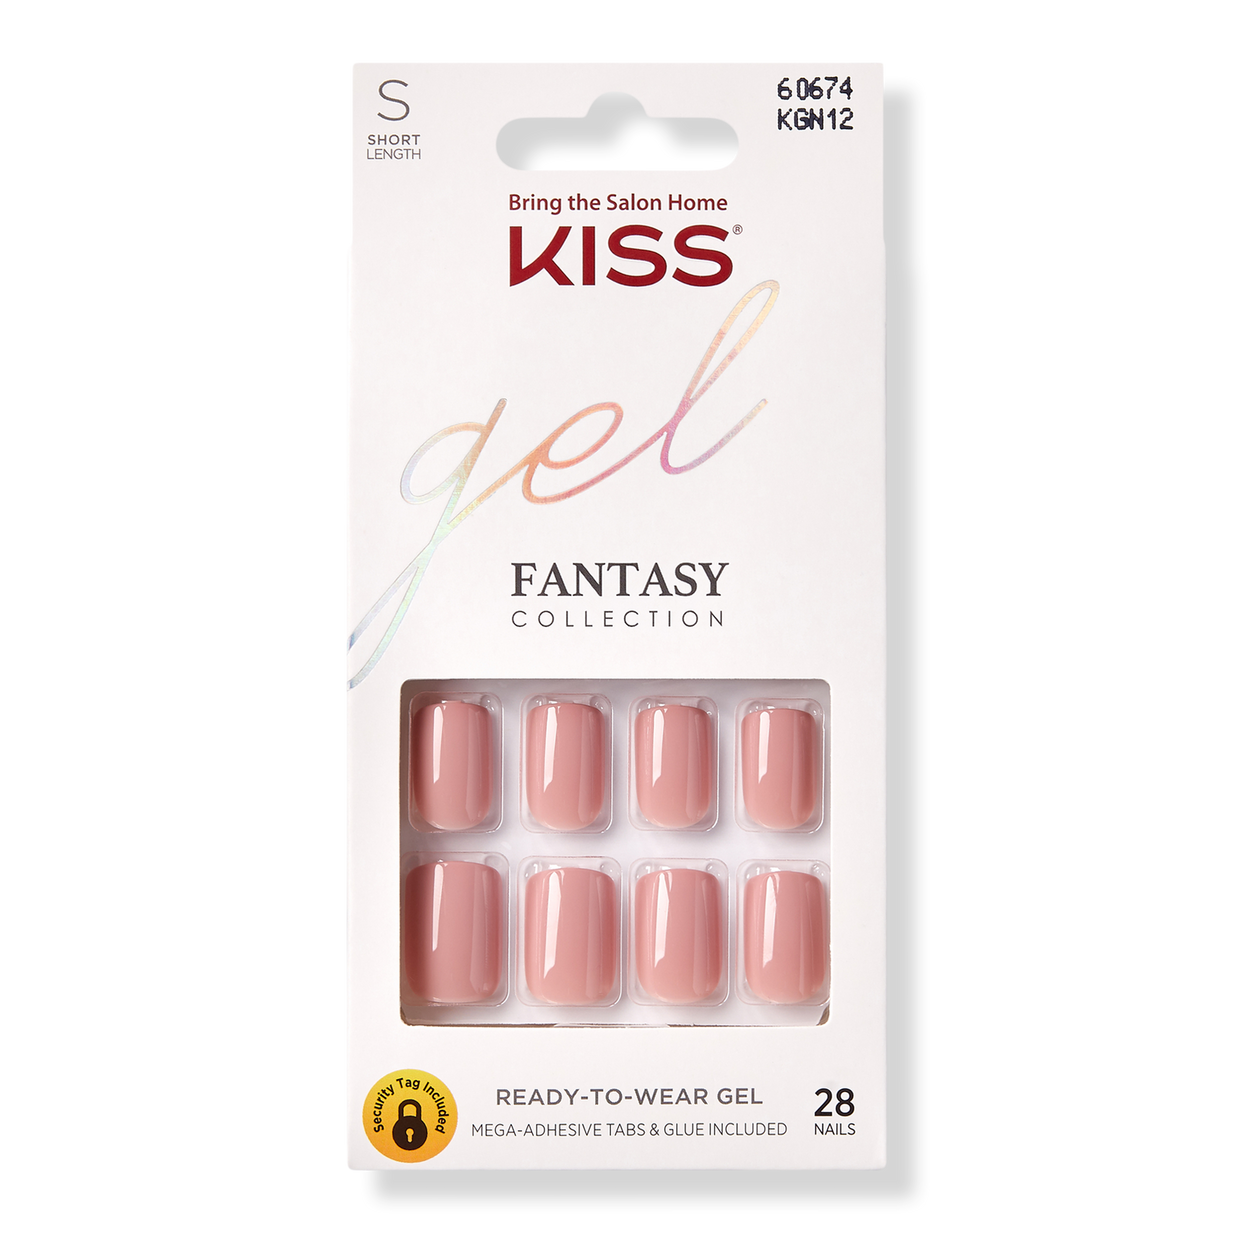 Ribbons Gel Fantasy Ready-To-Wear Fake Nails - Kiss | Ulta Beauty